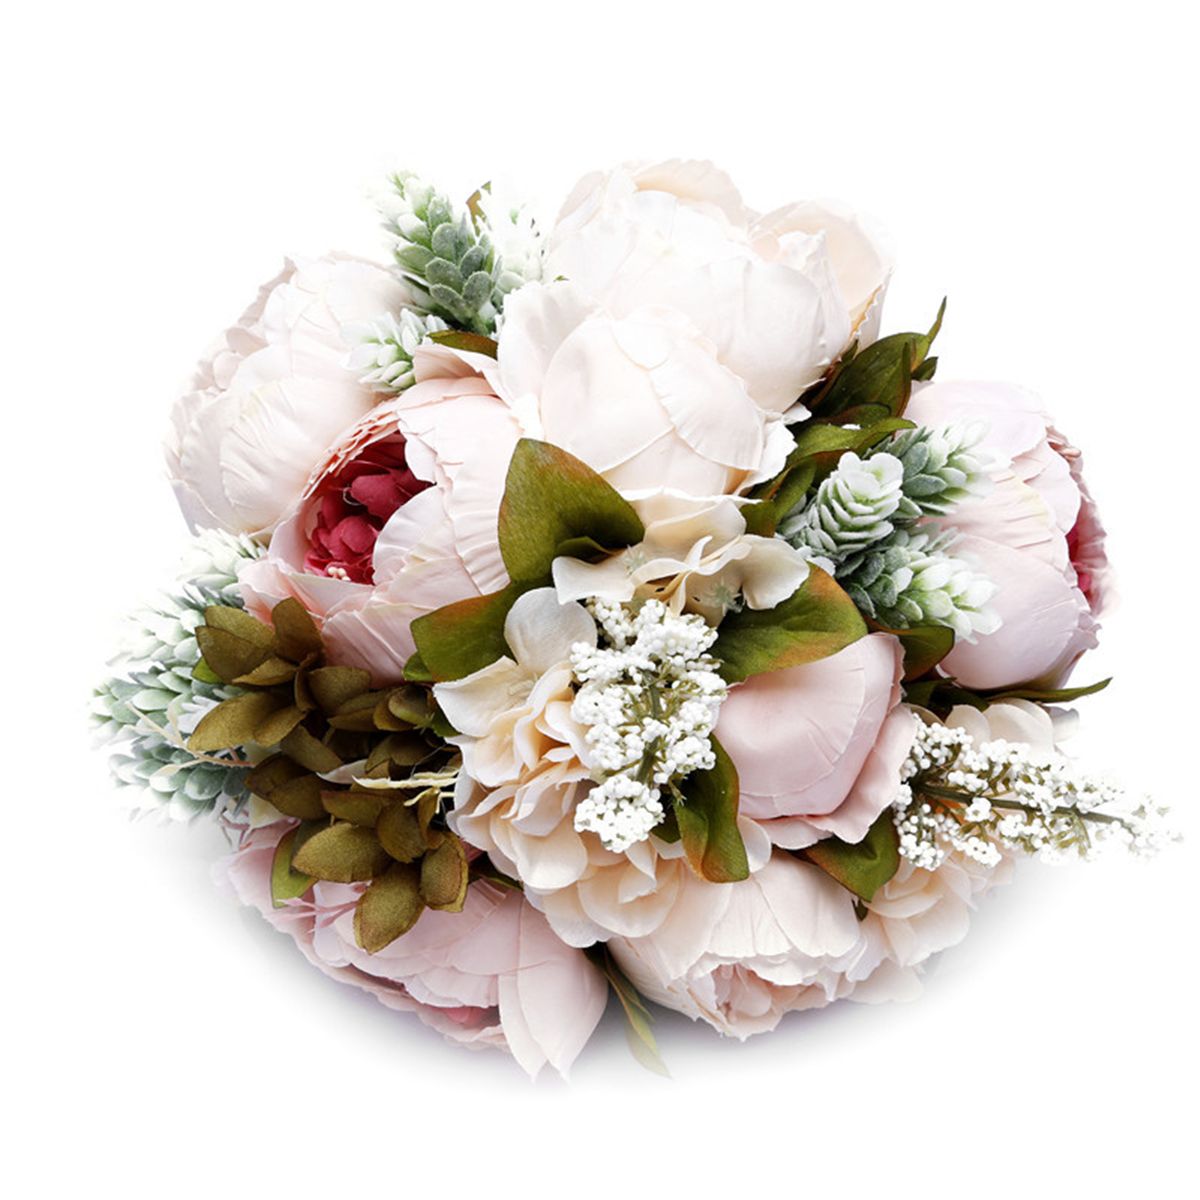 Women-Bridal-Bouquet-Artificial-Flower-Rose-Accessories-Bridesmaid-Wedding-Favors-Decor-1438512